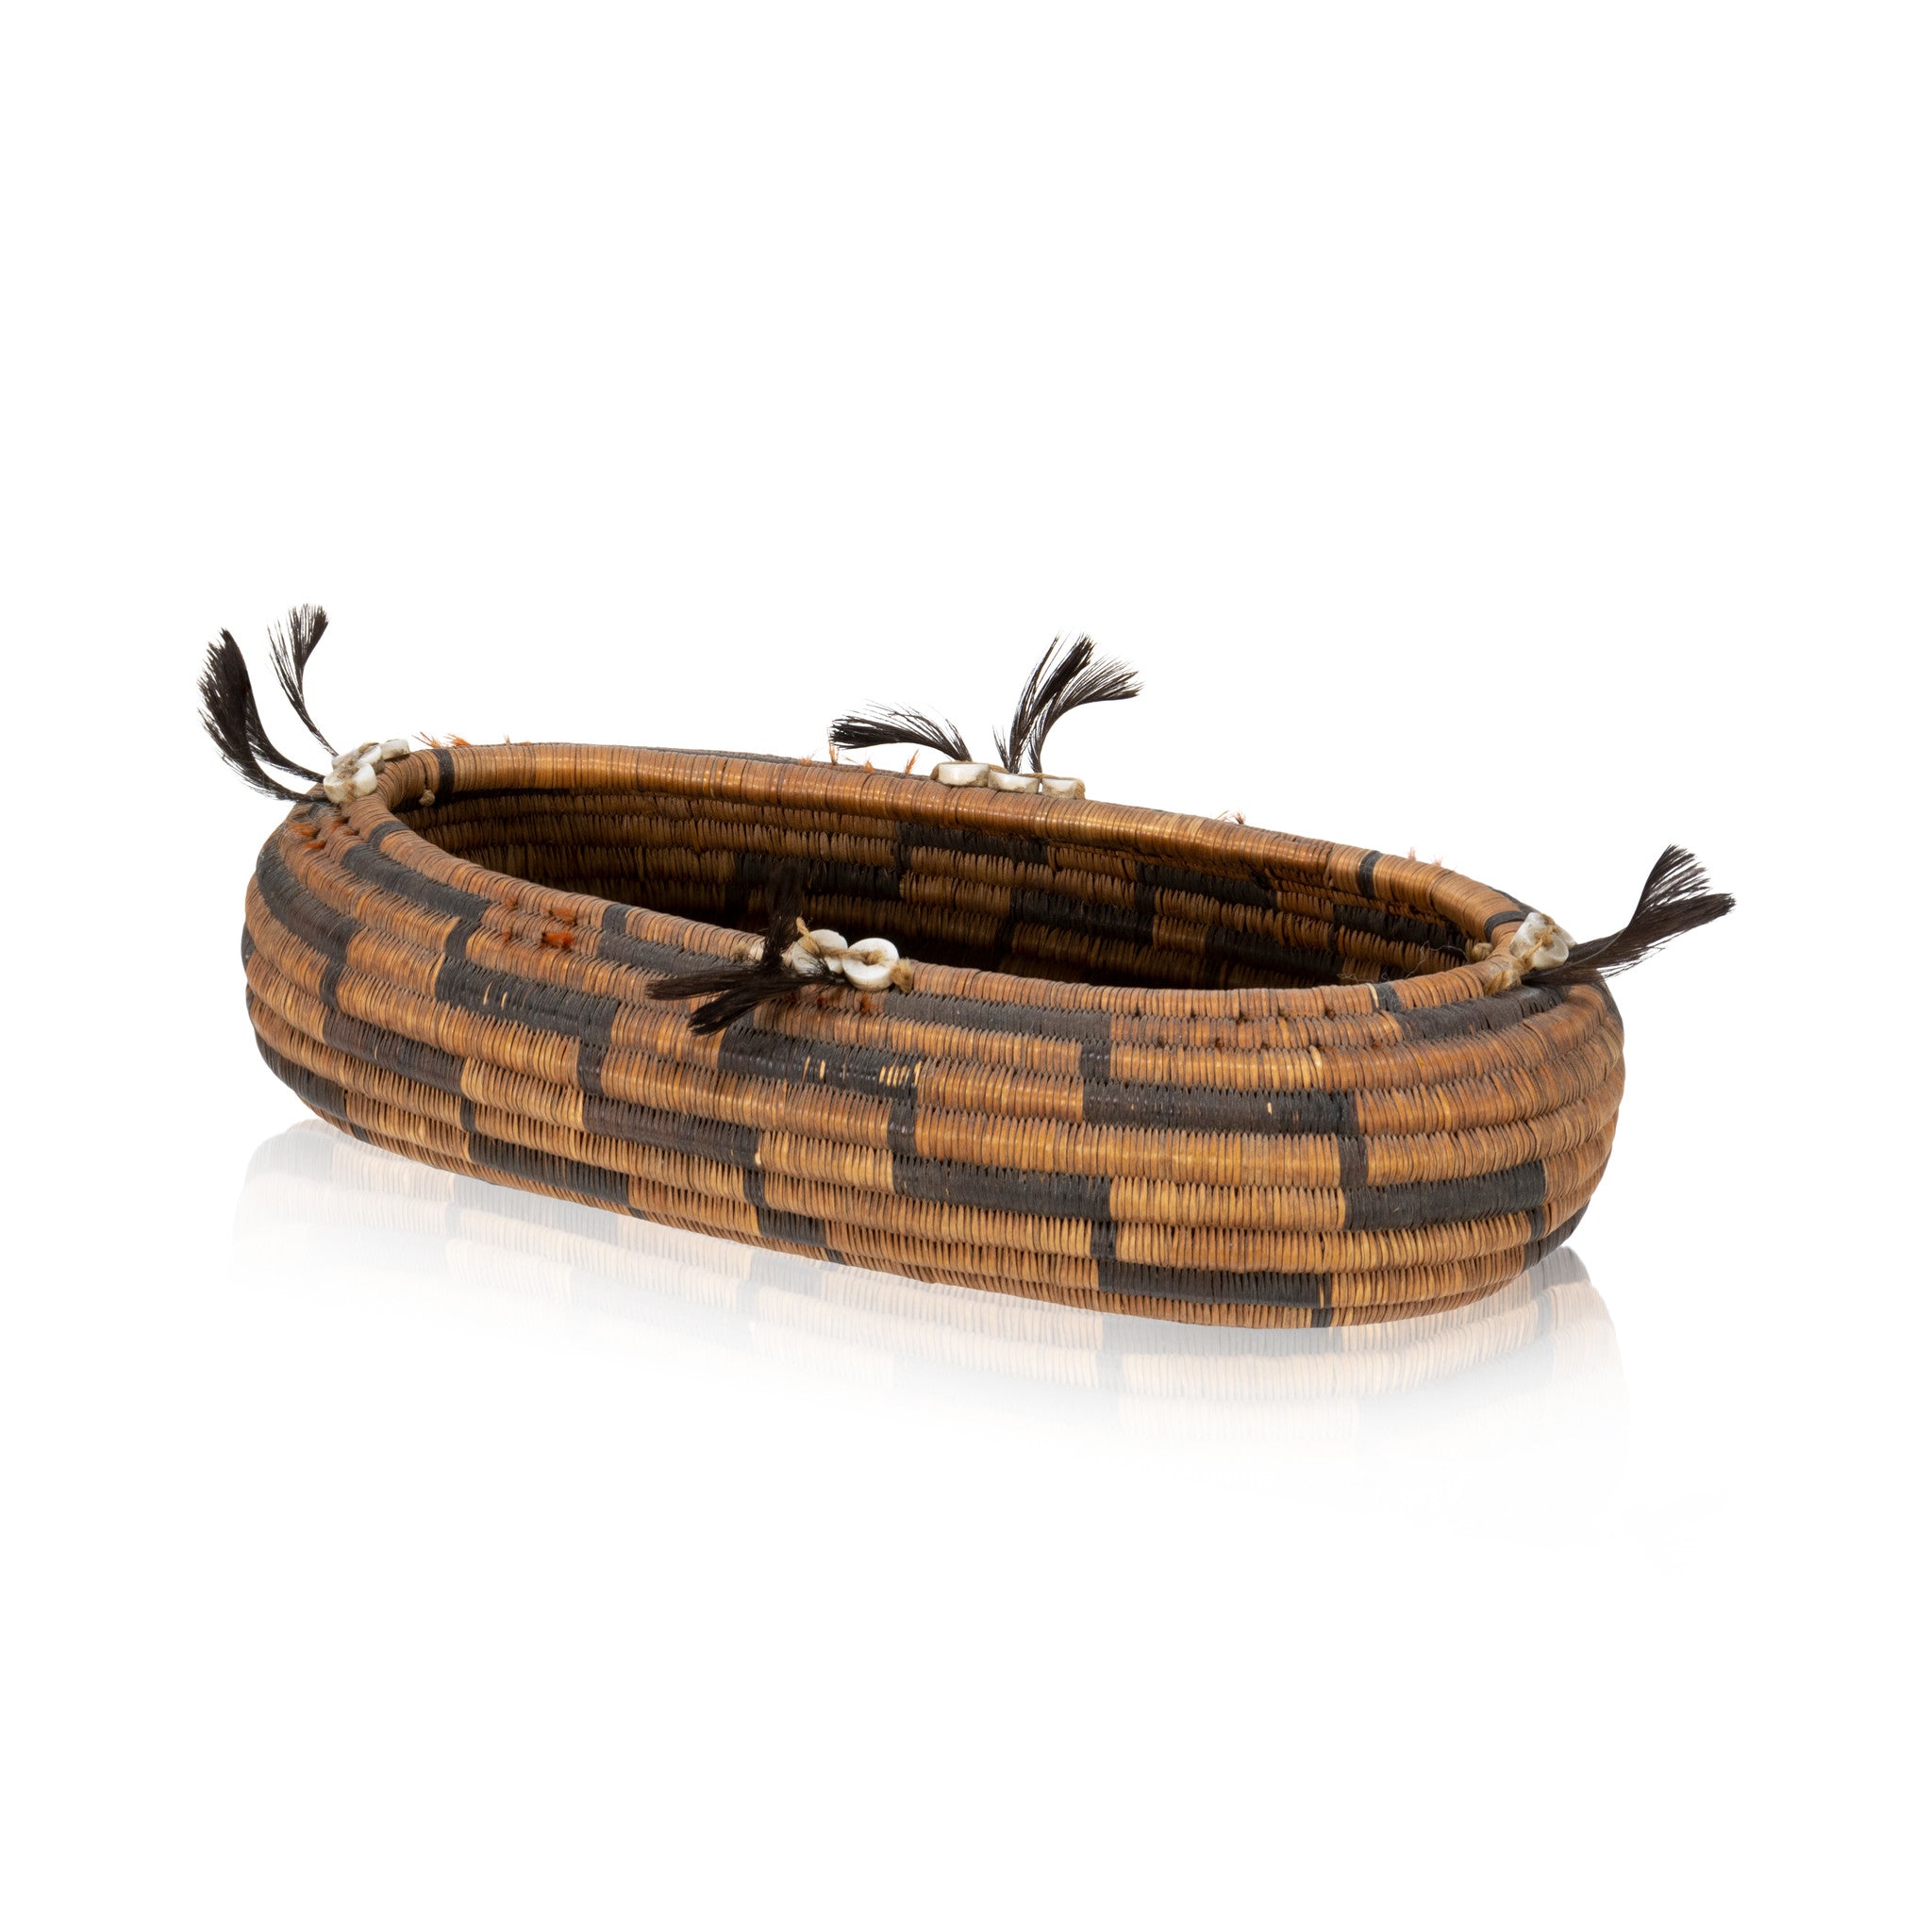 Pomo Boat Basket, Native, Basketry, Vertical